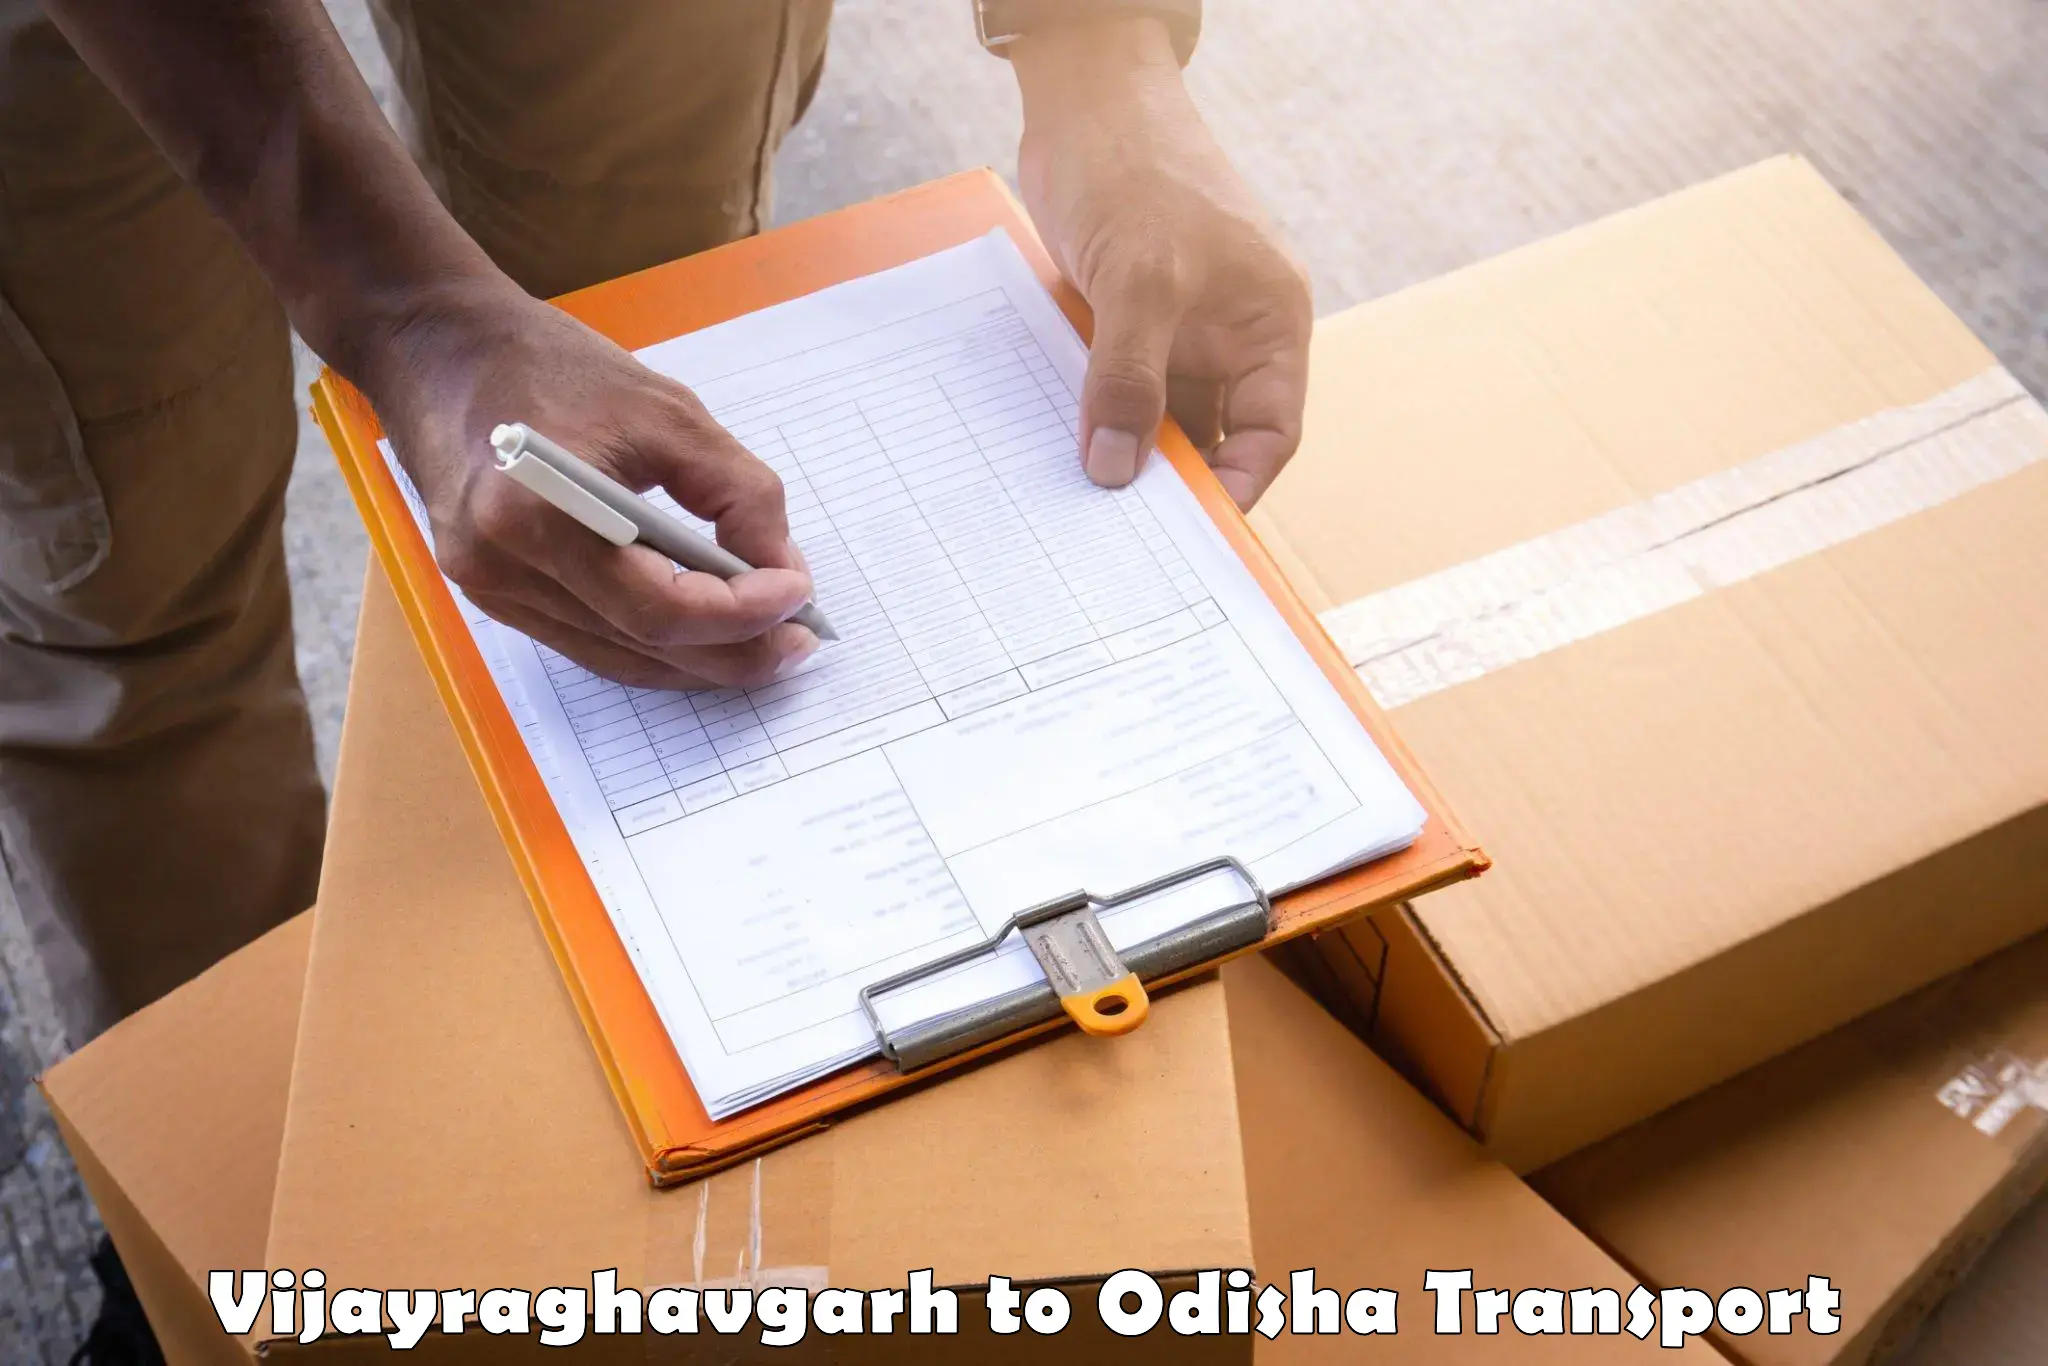 Pick up transport service Vijayraghavgarh to Mangalpur